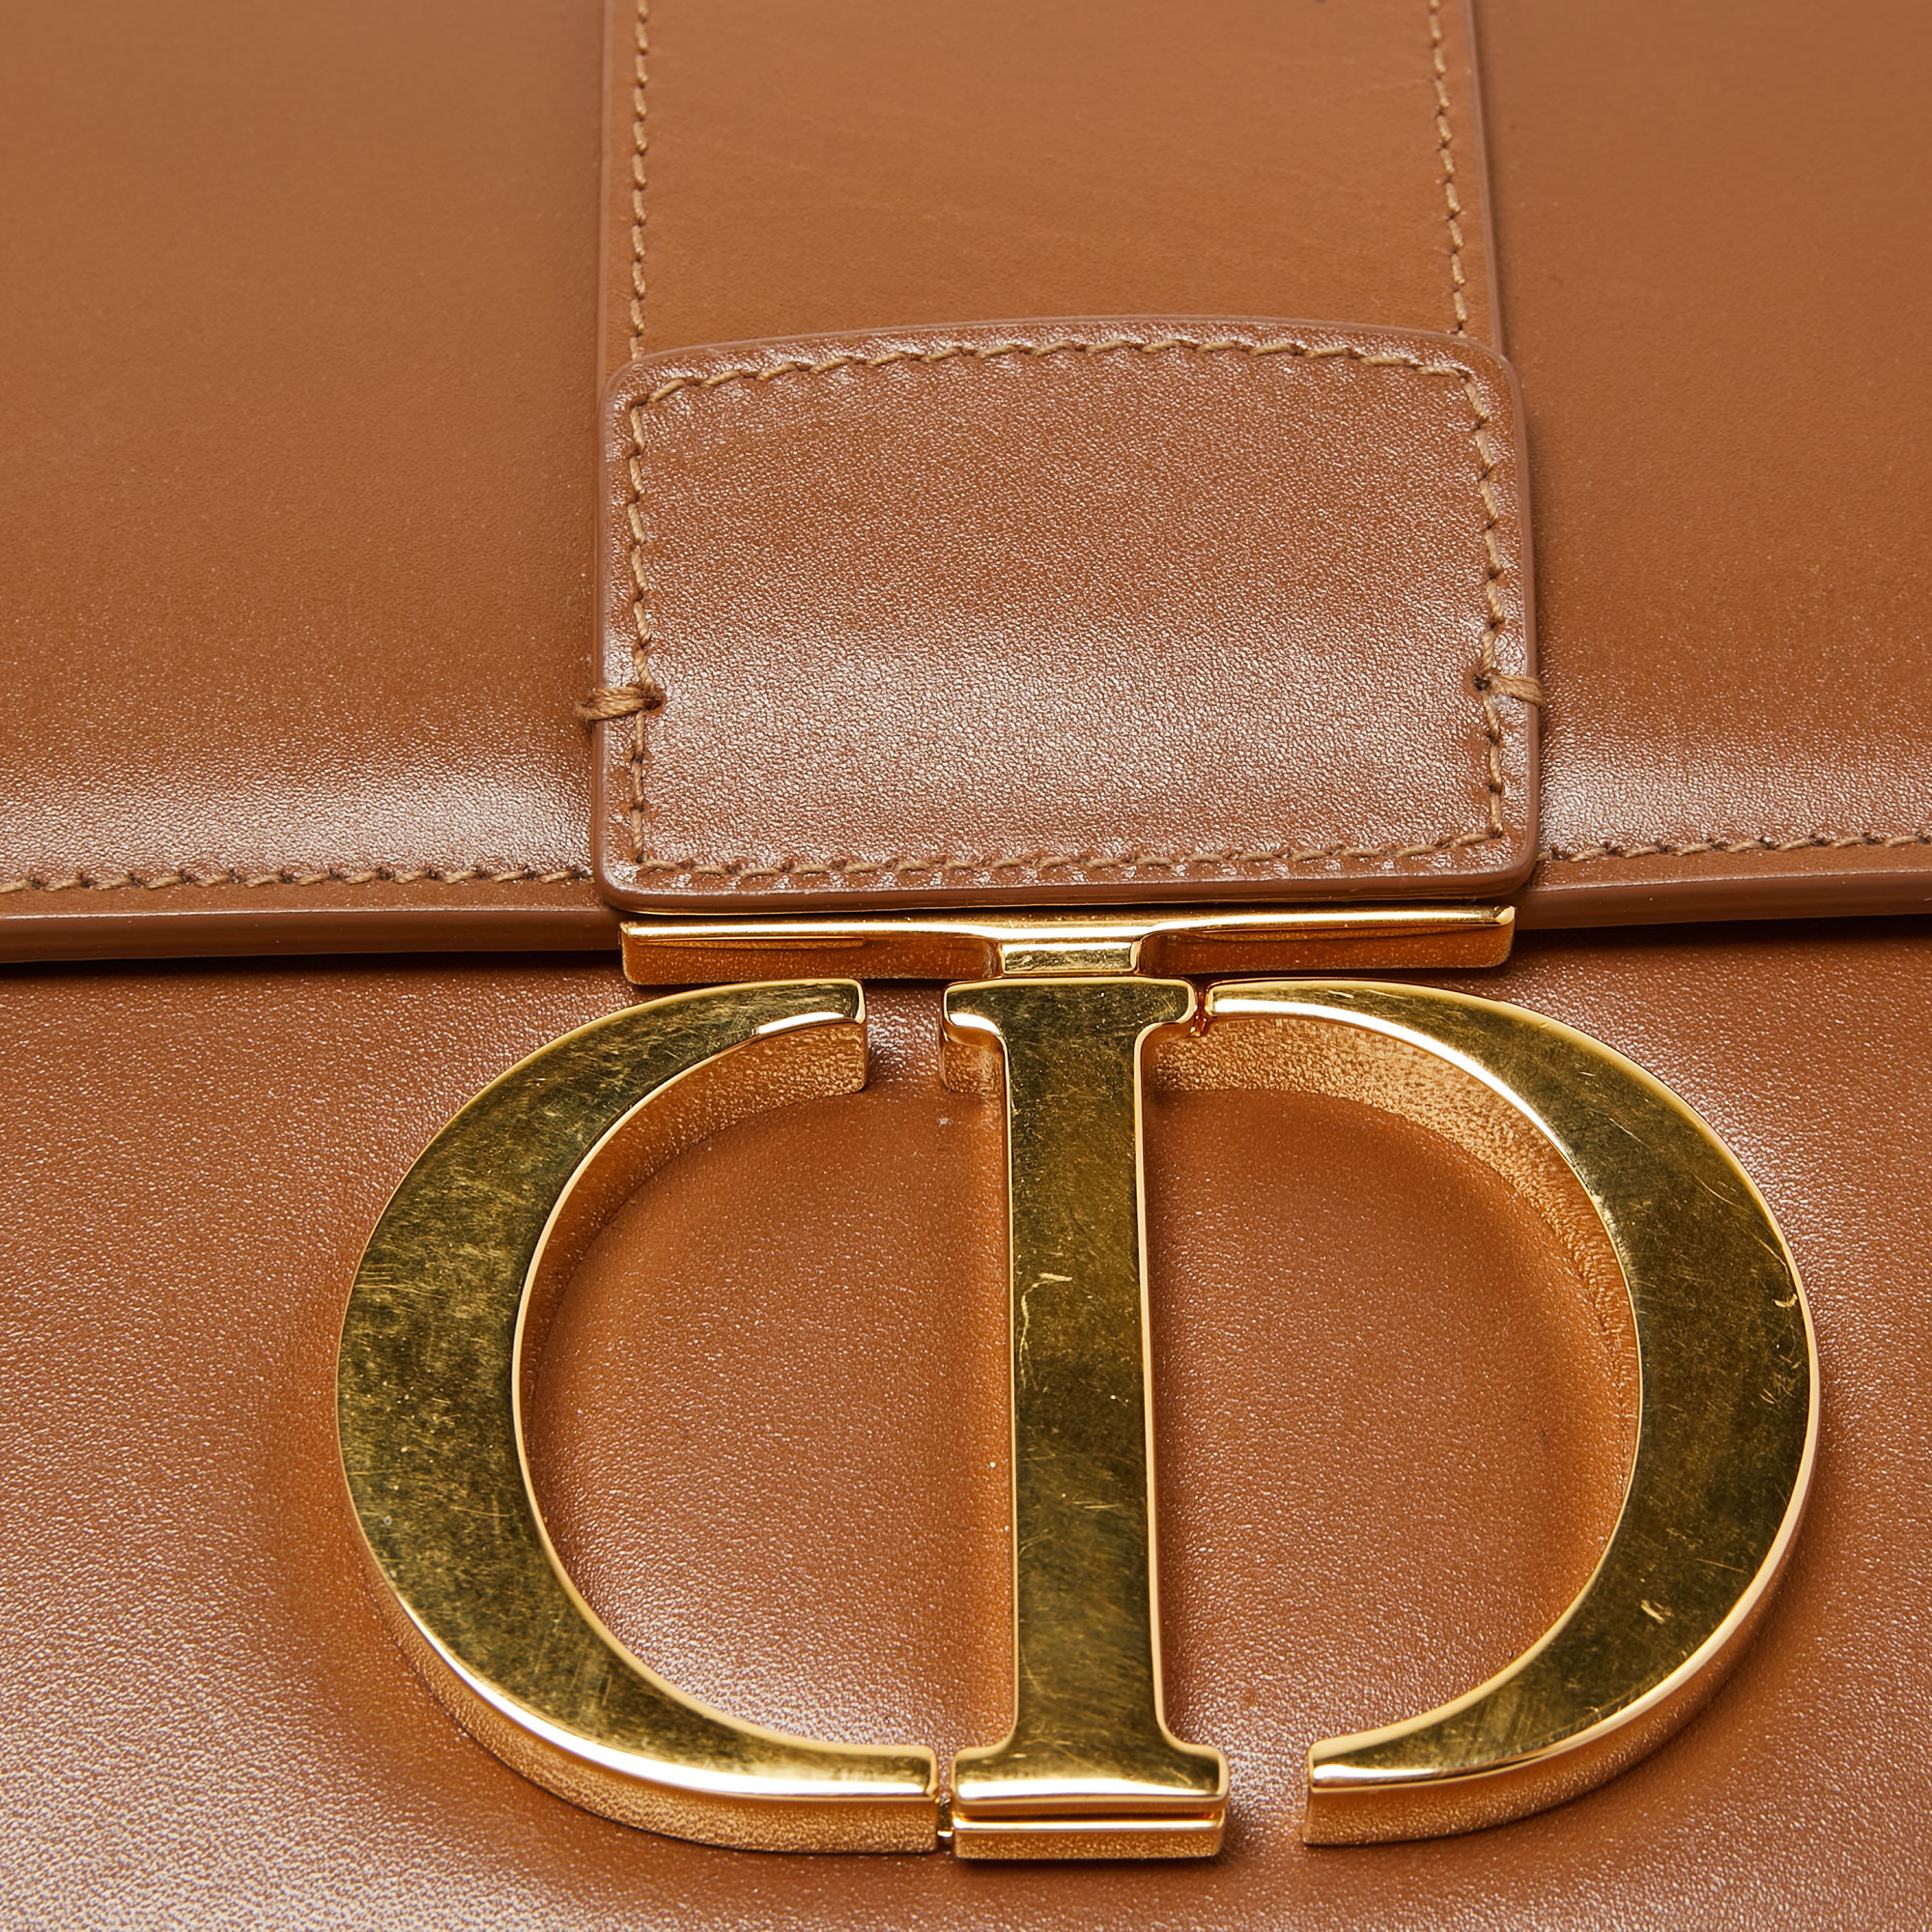 Dior Brown Leather Montaigne 30 Flap Shoulder Bag